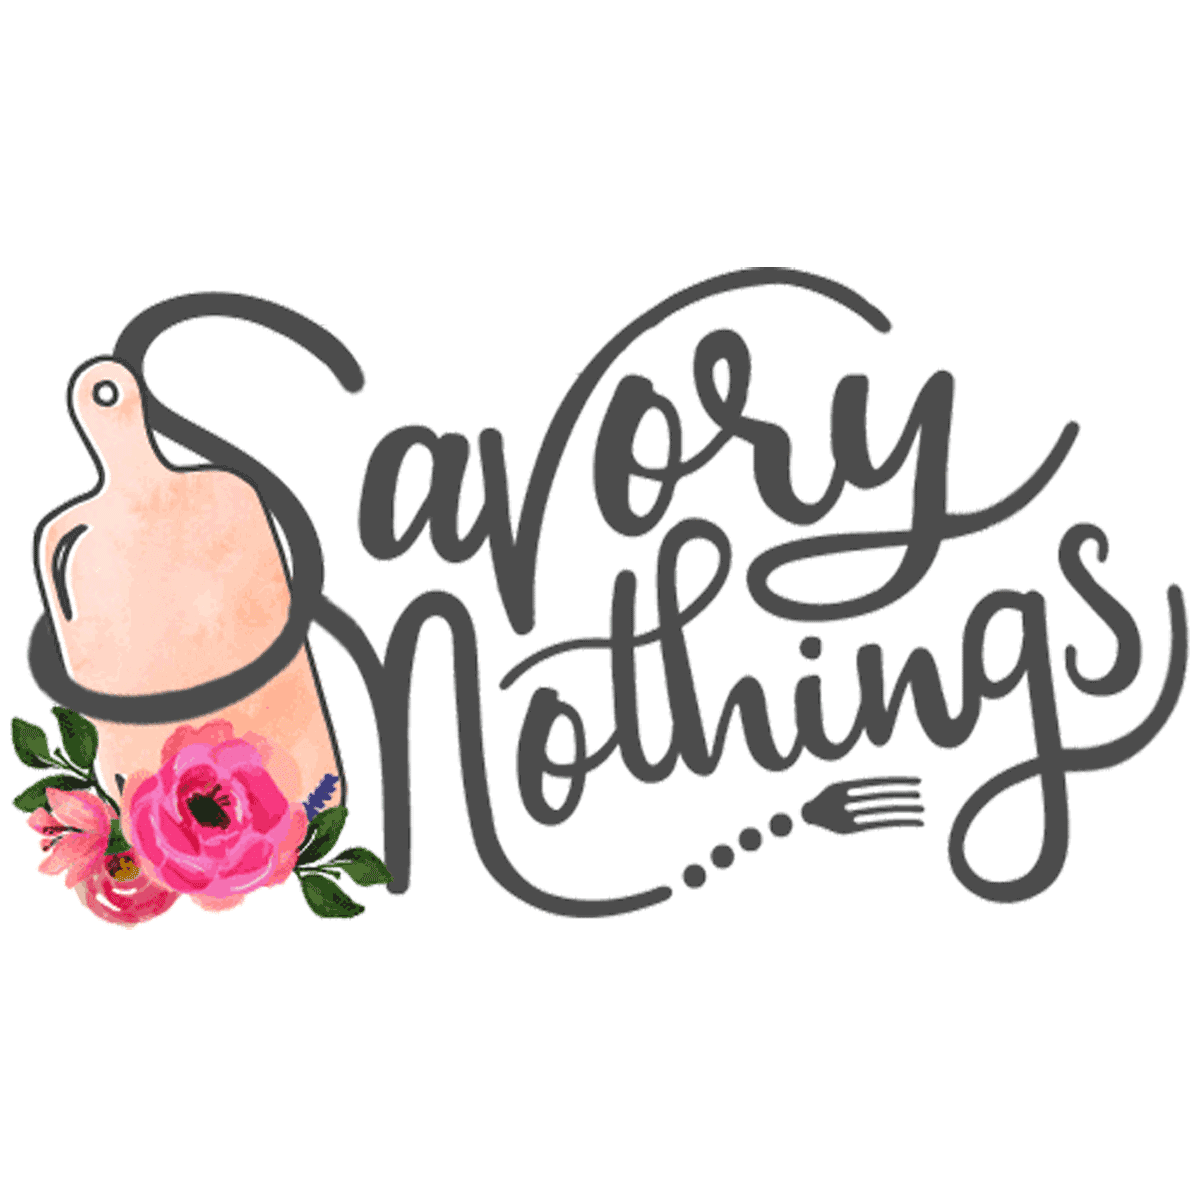 https://www.savorynothings.com/wp-content/uploads/2020/06/savory-nothings-organization-logo.png